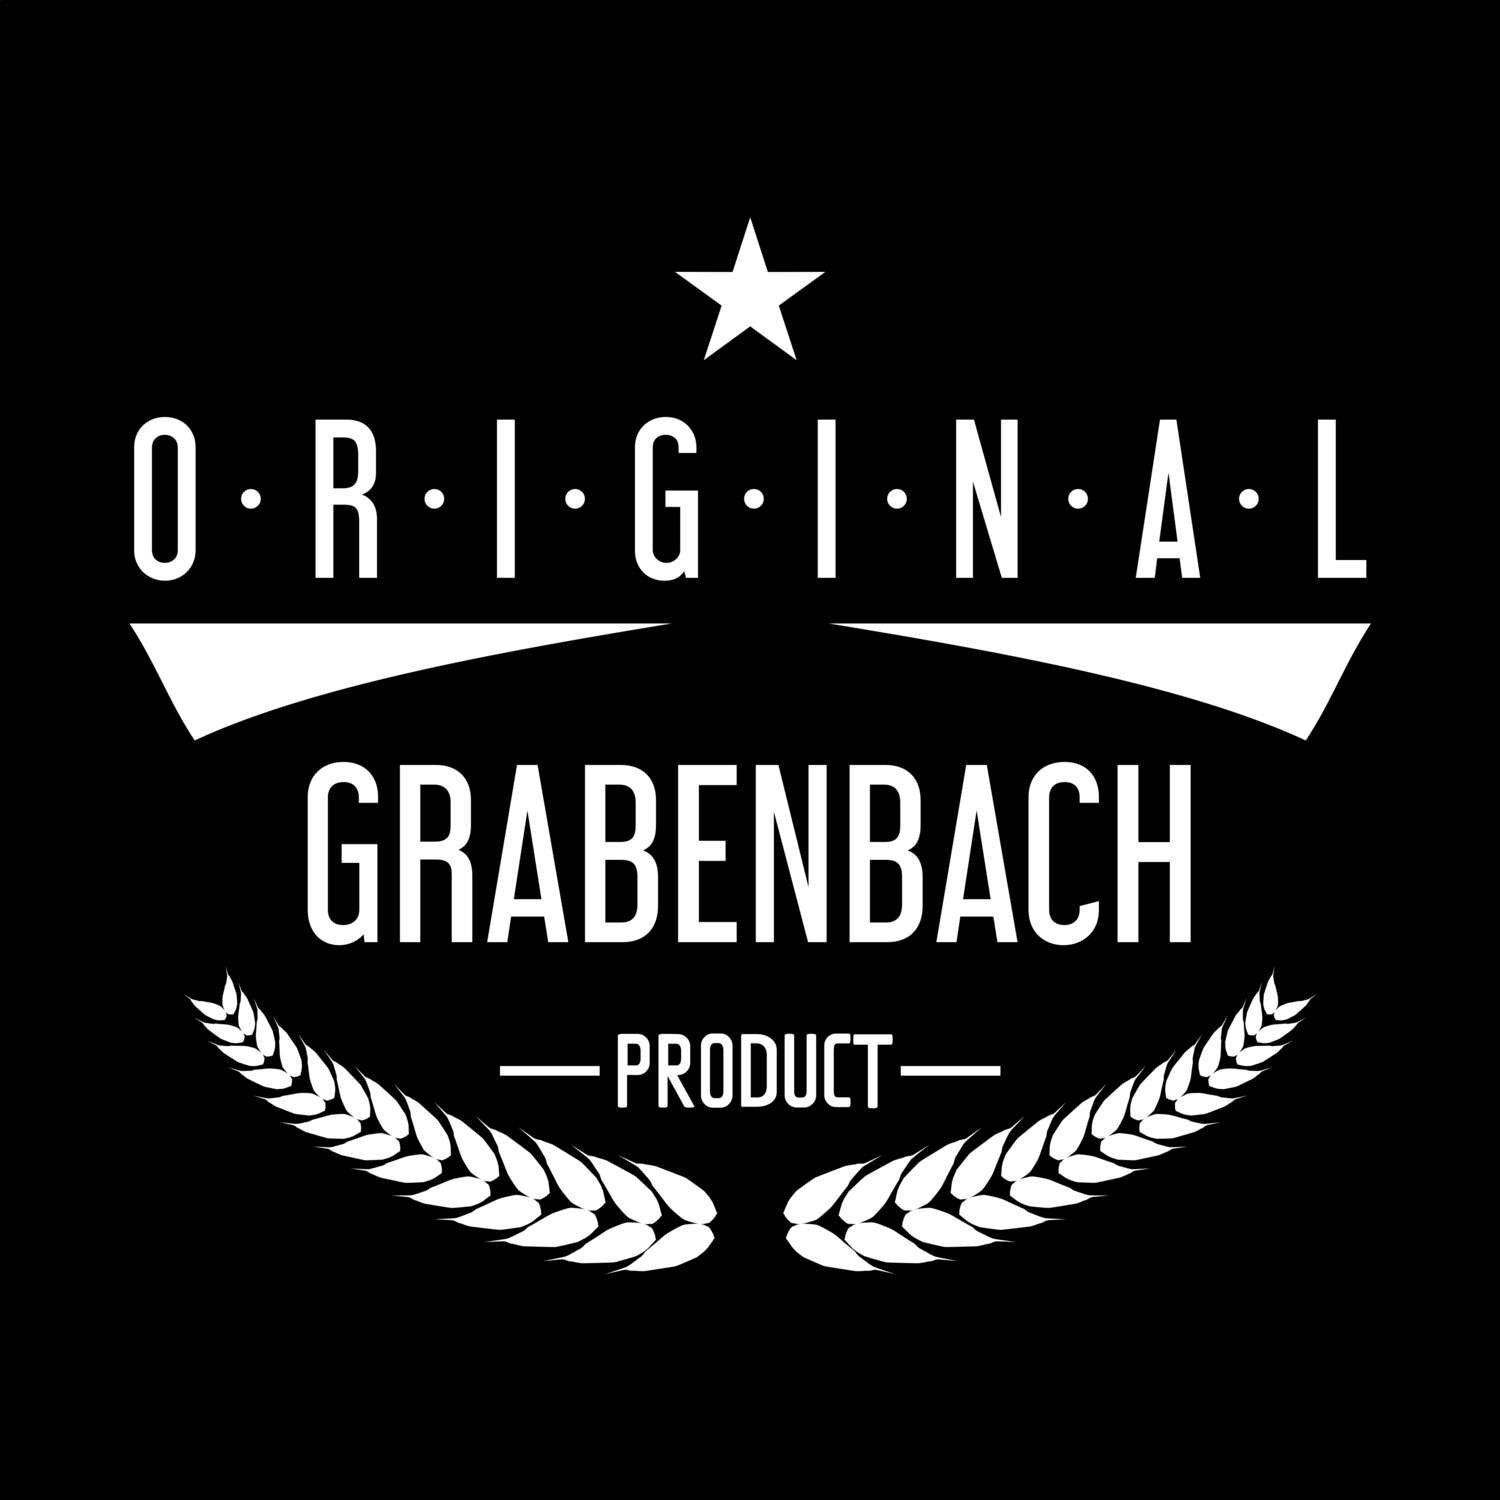 Grabenbach T-Shirt »Original Product«